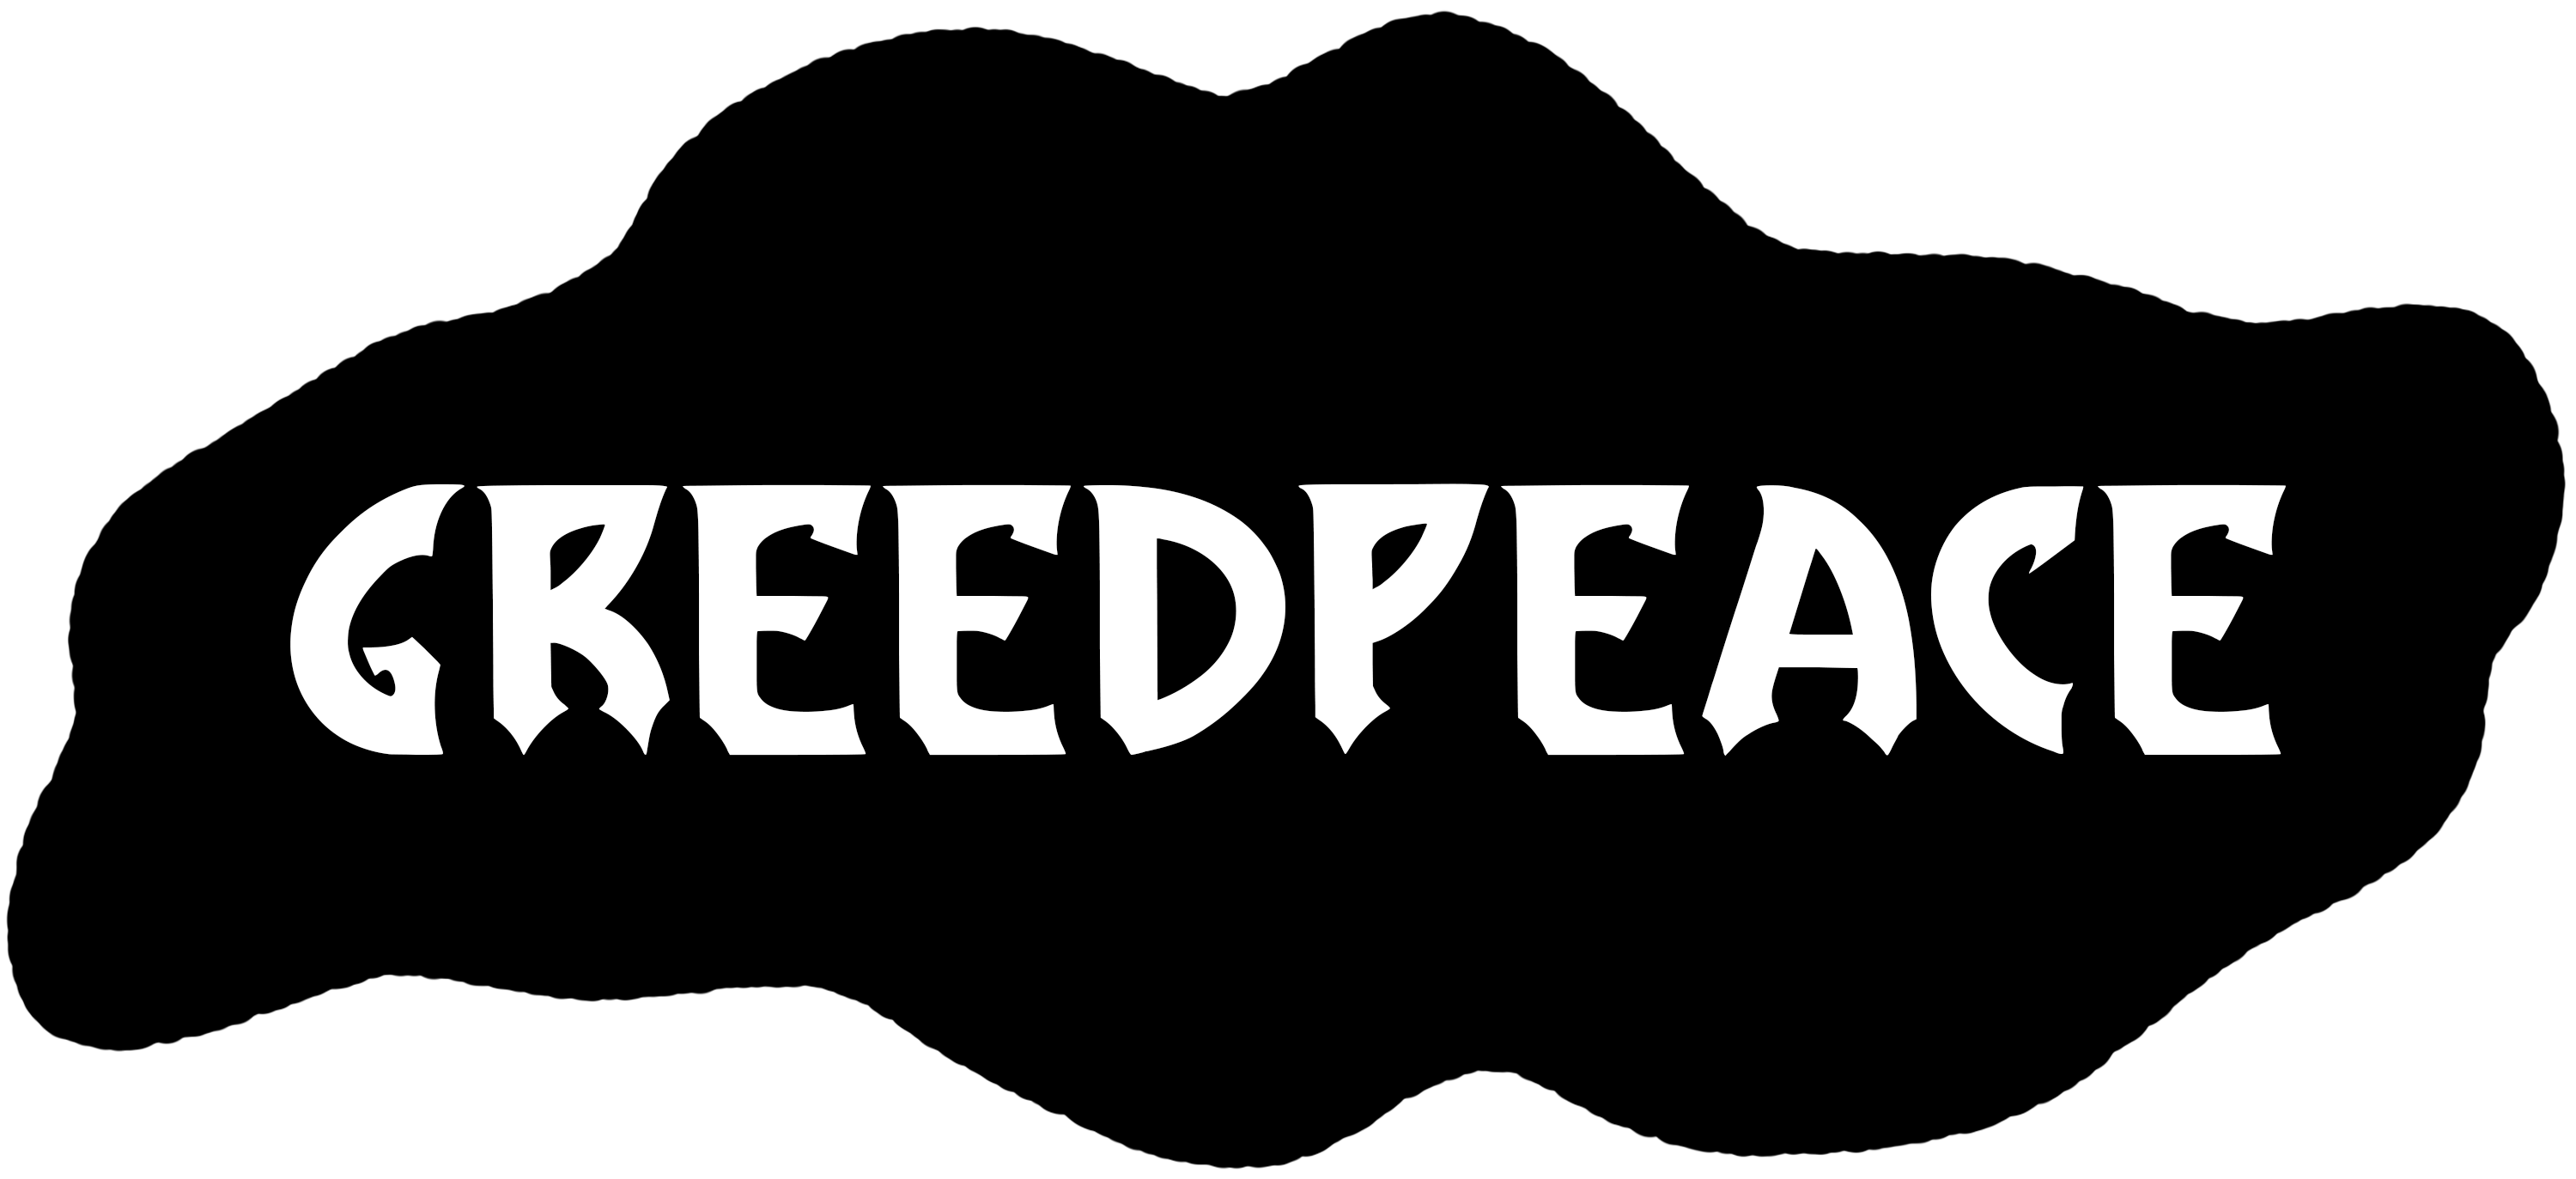 Greedpeace